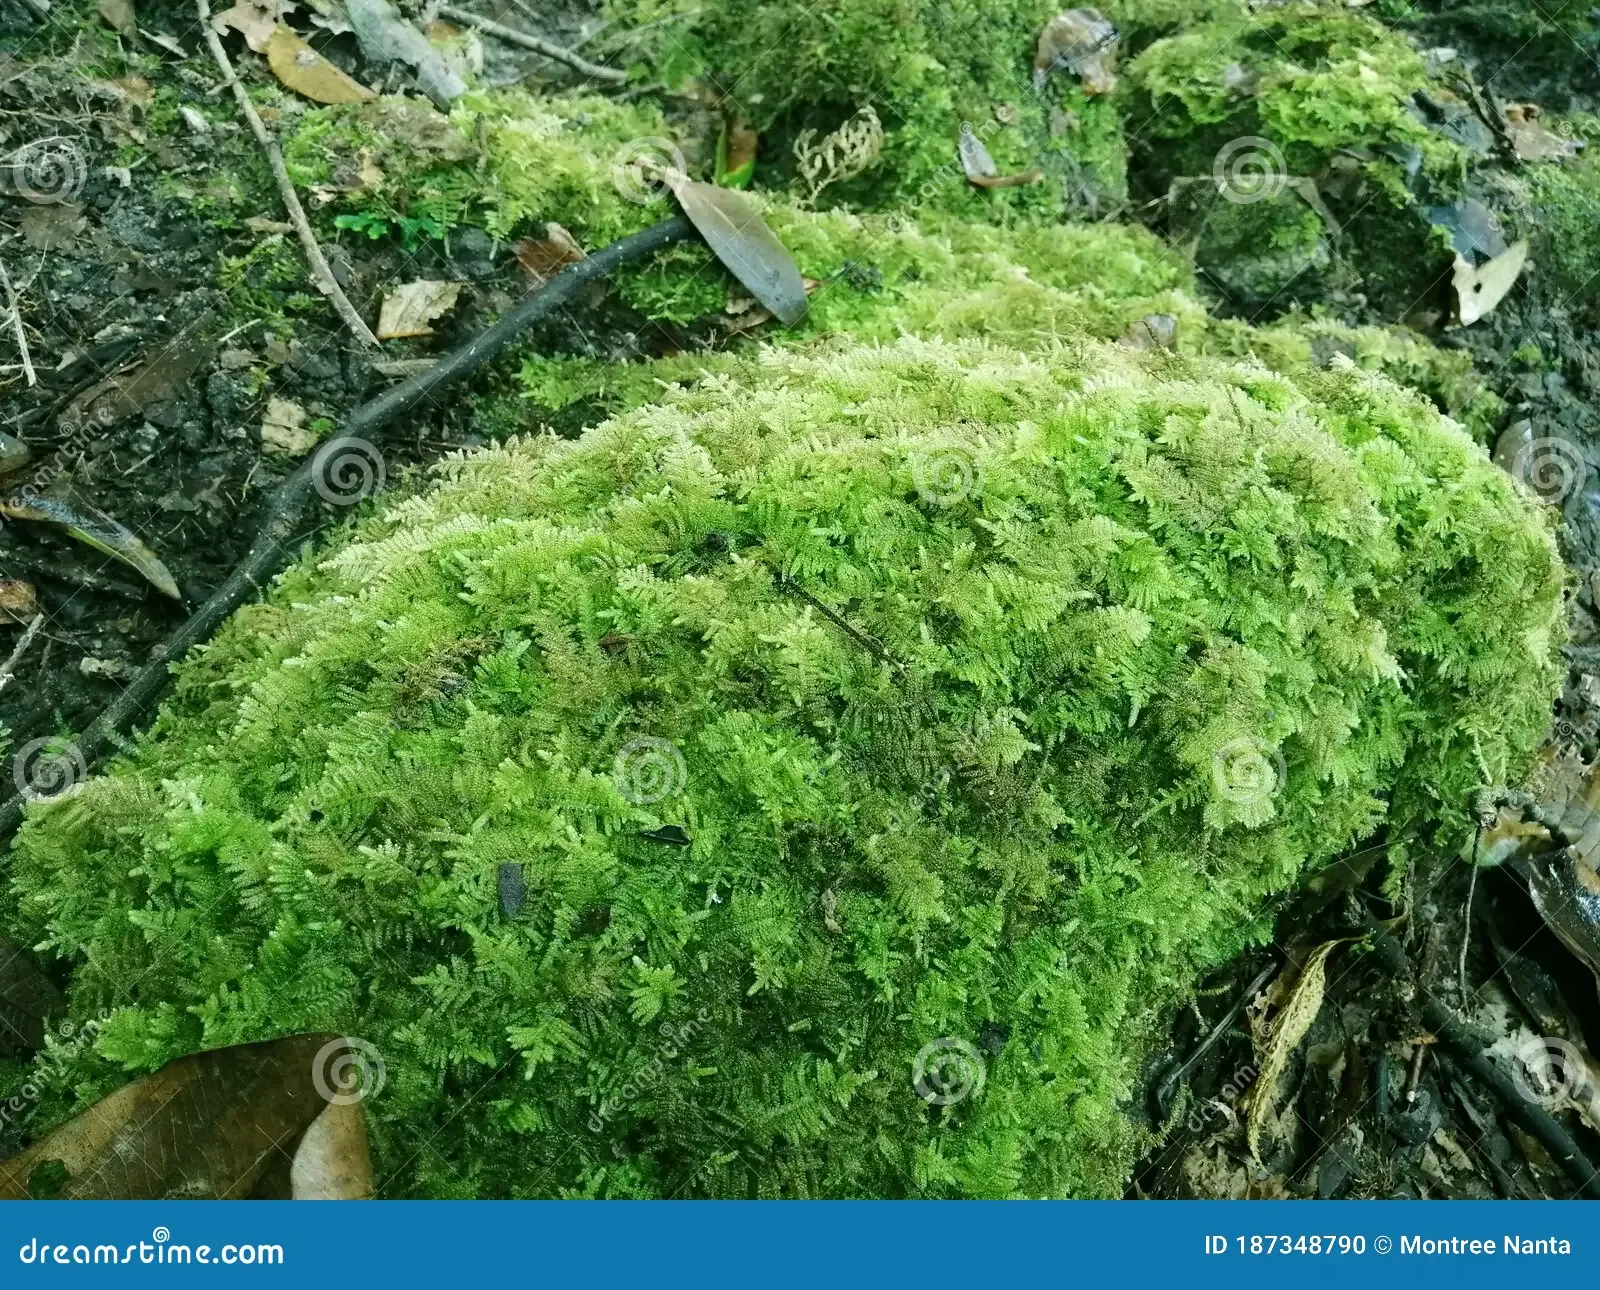 moss-grows-rocks-common-fern-moss-thuidium-delicatulum-mosses-type-bryophyte-which-group-non-vascular-plants-187348790.jpg